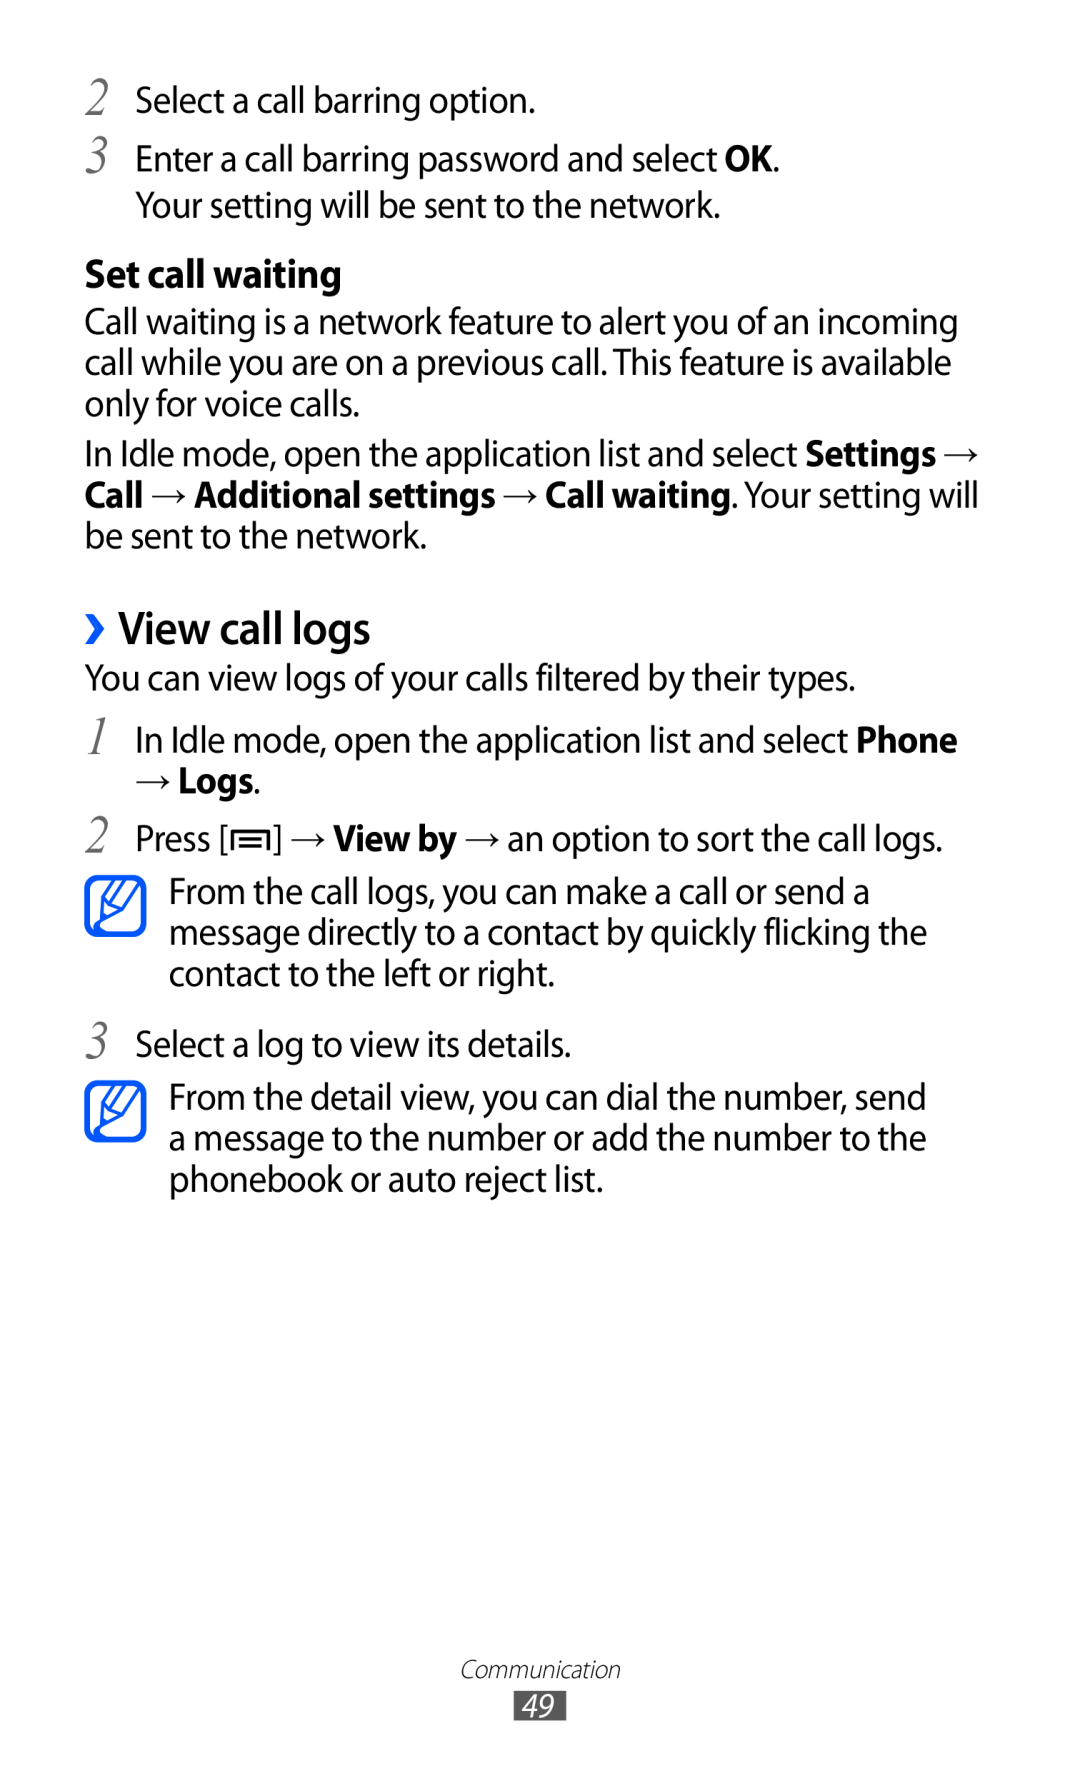 Samsung GT-I9070 user manual ››View call logs, Set call waiting, → Logs 